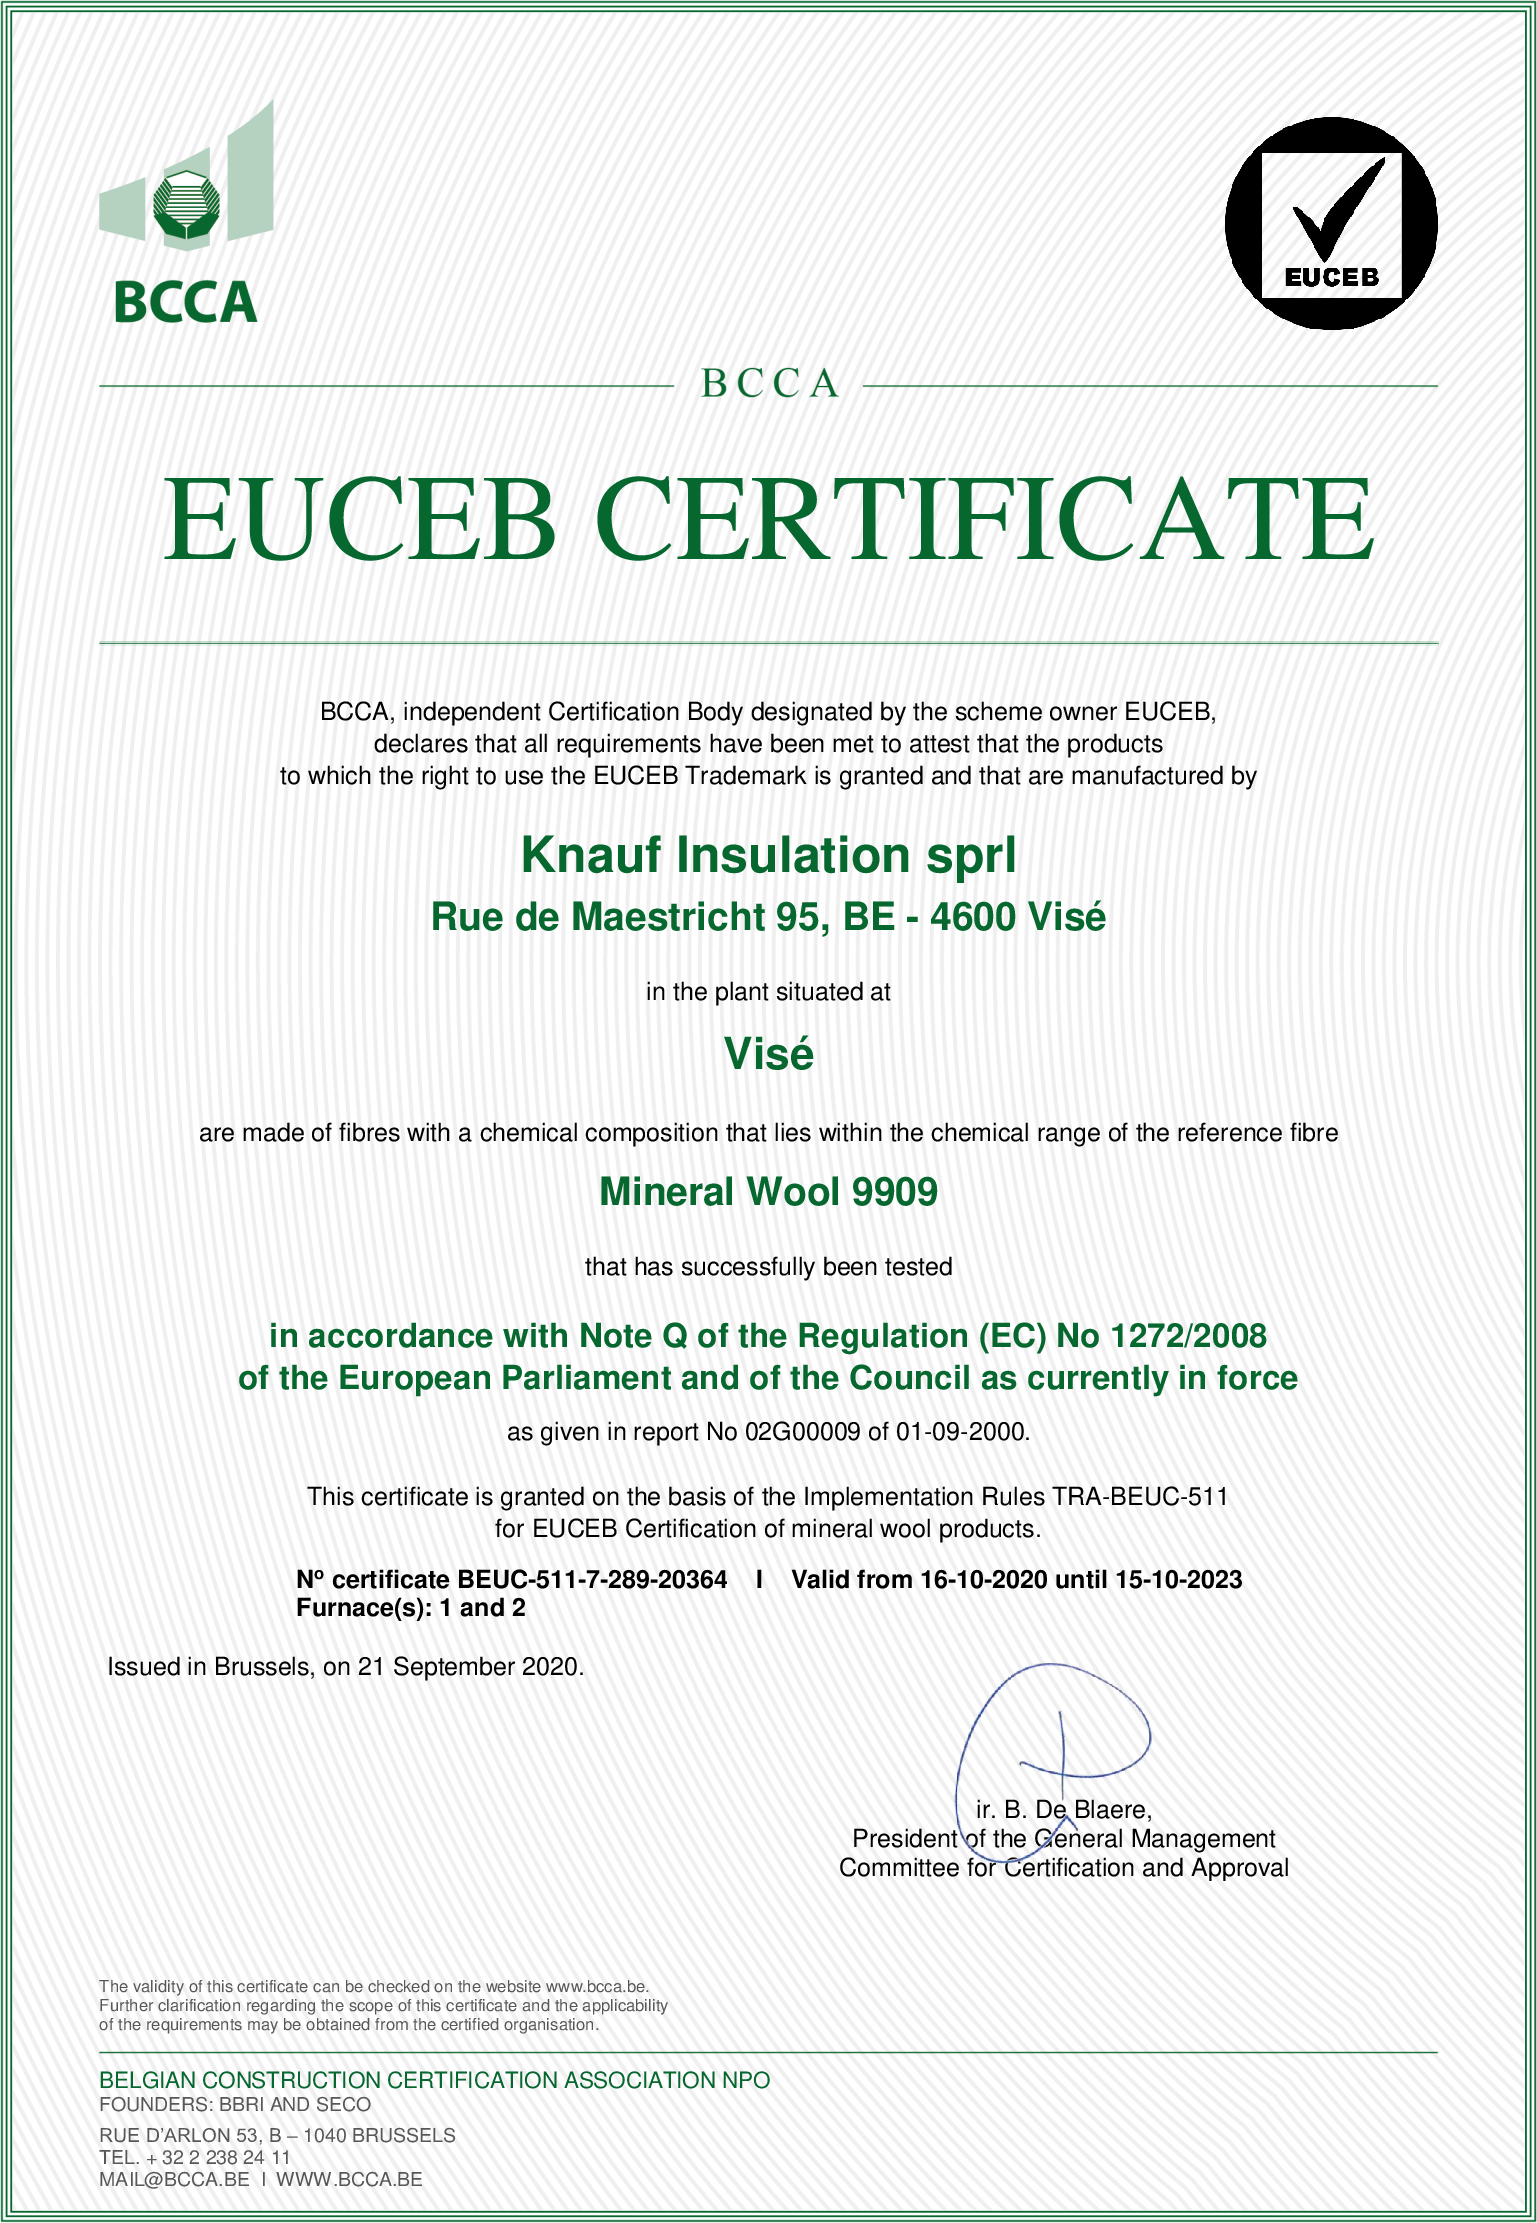 EUCEB certificaat